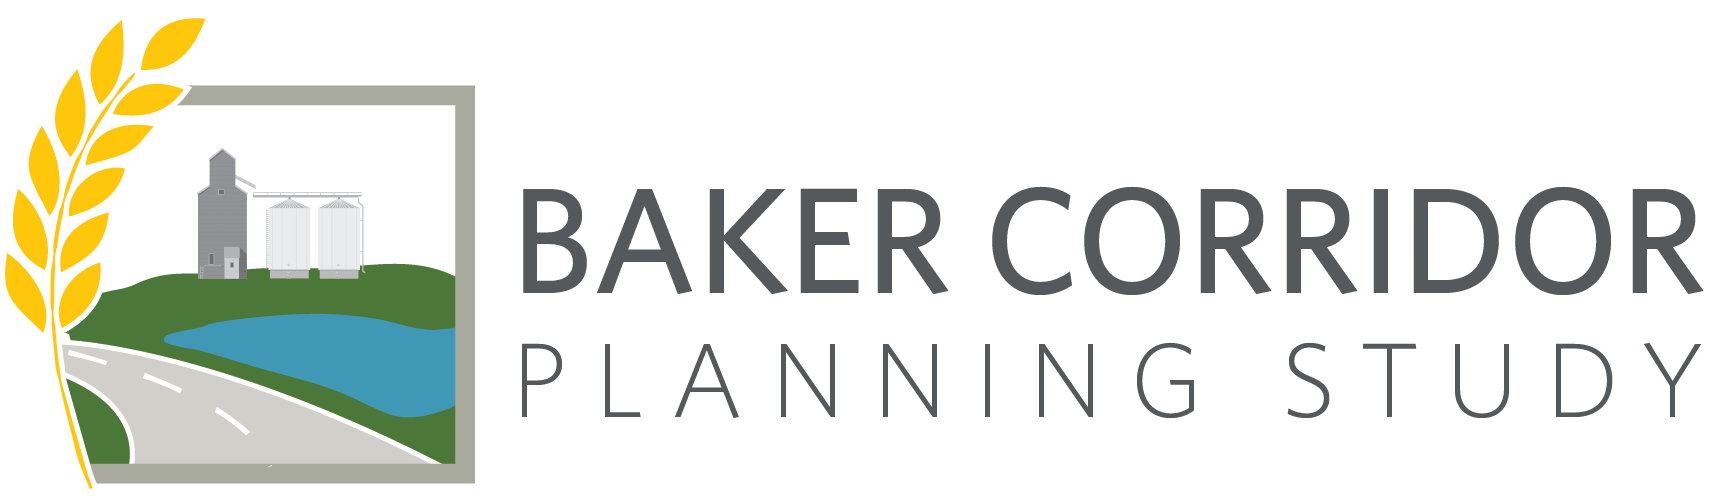 Baker Corridor Planning Study logo